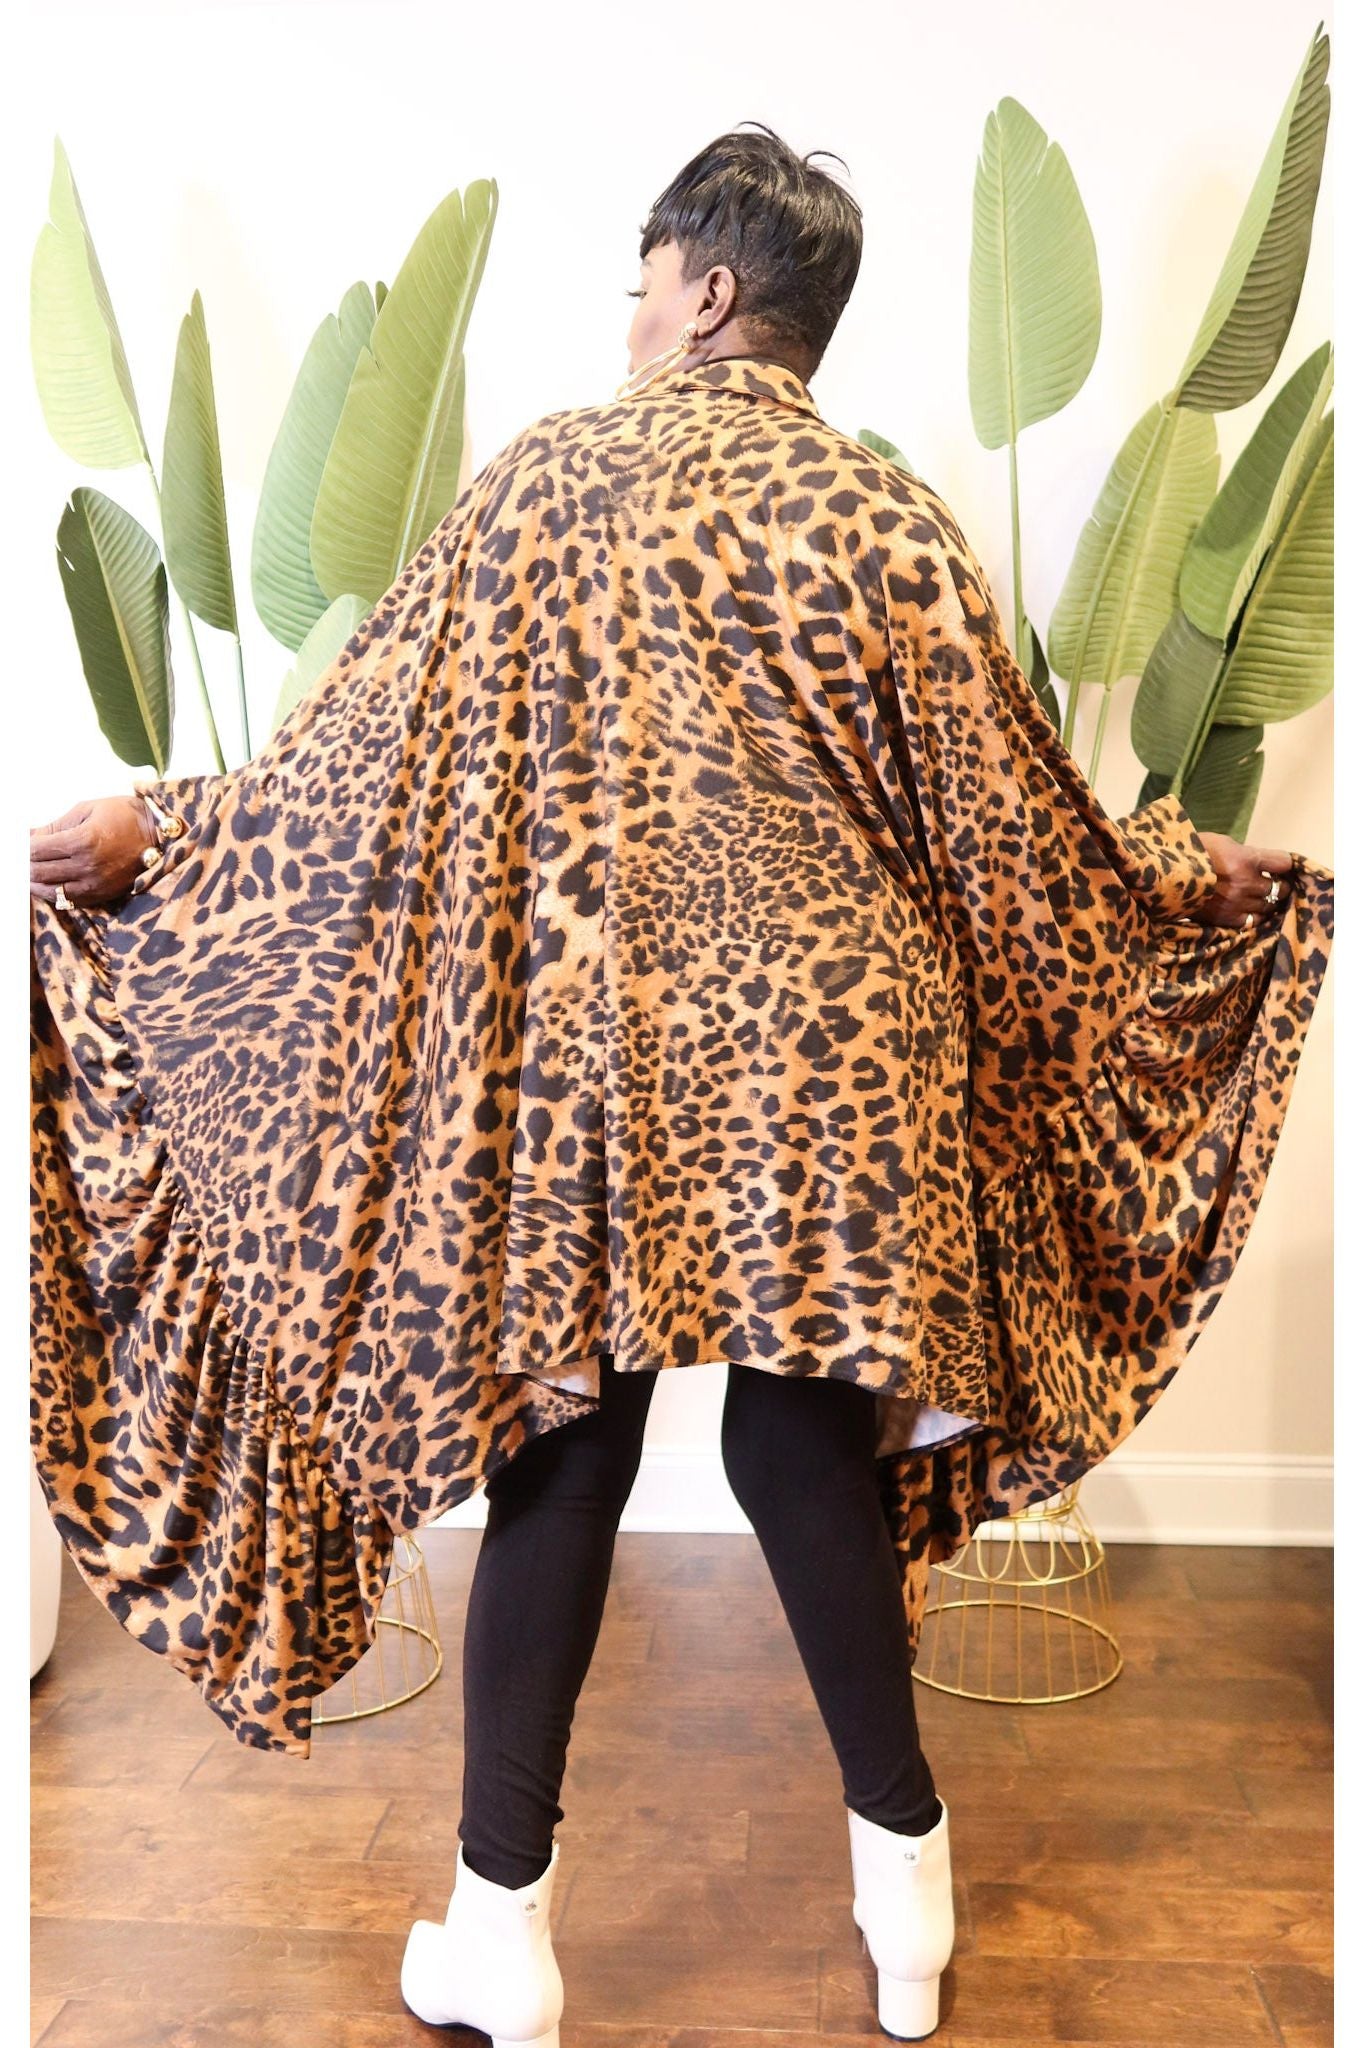 She is it- Cheetah Print Dress or Top